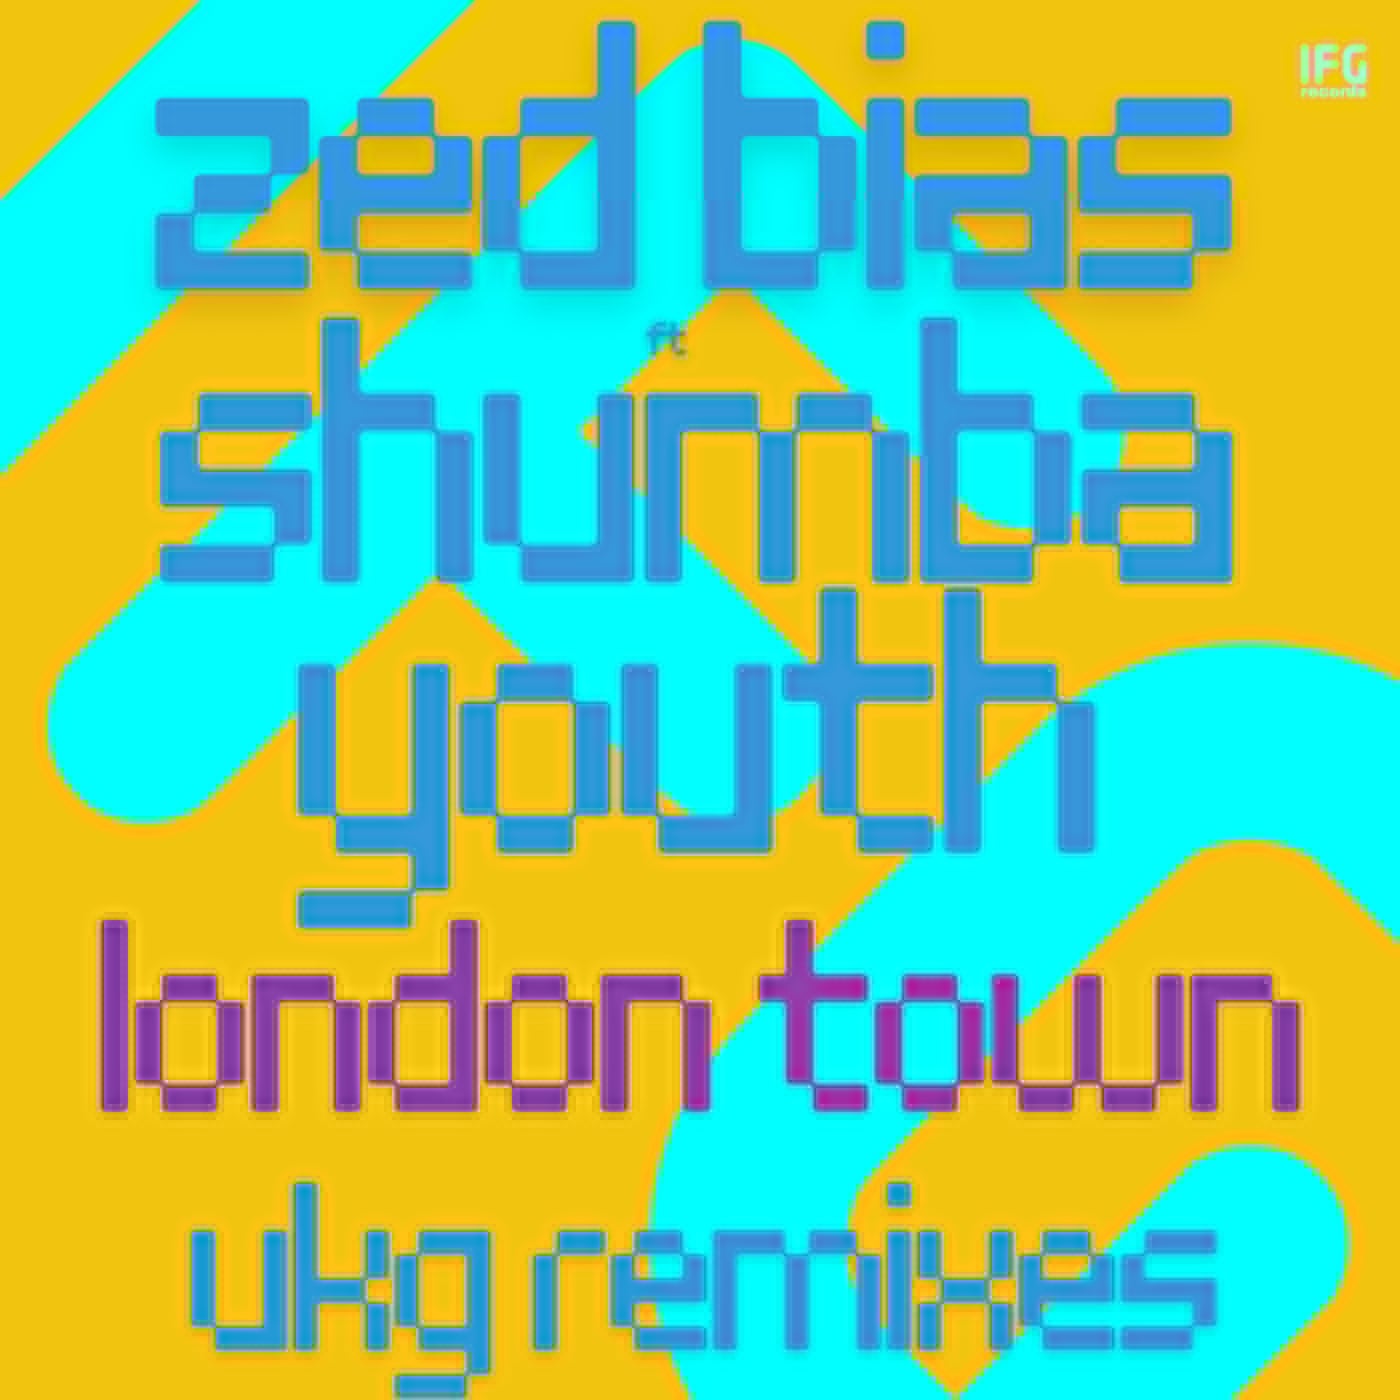 London Town (UKG Remixes)